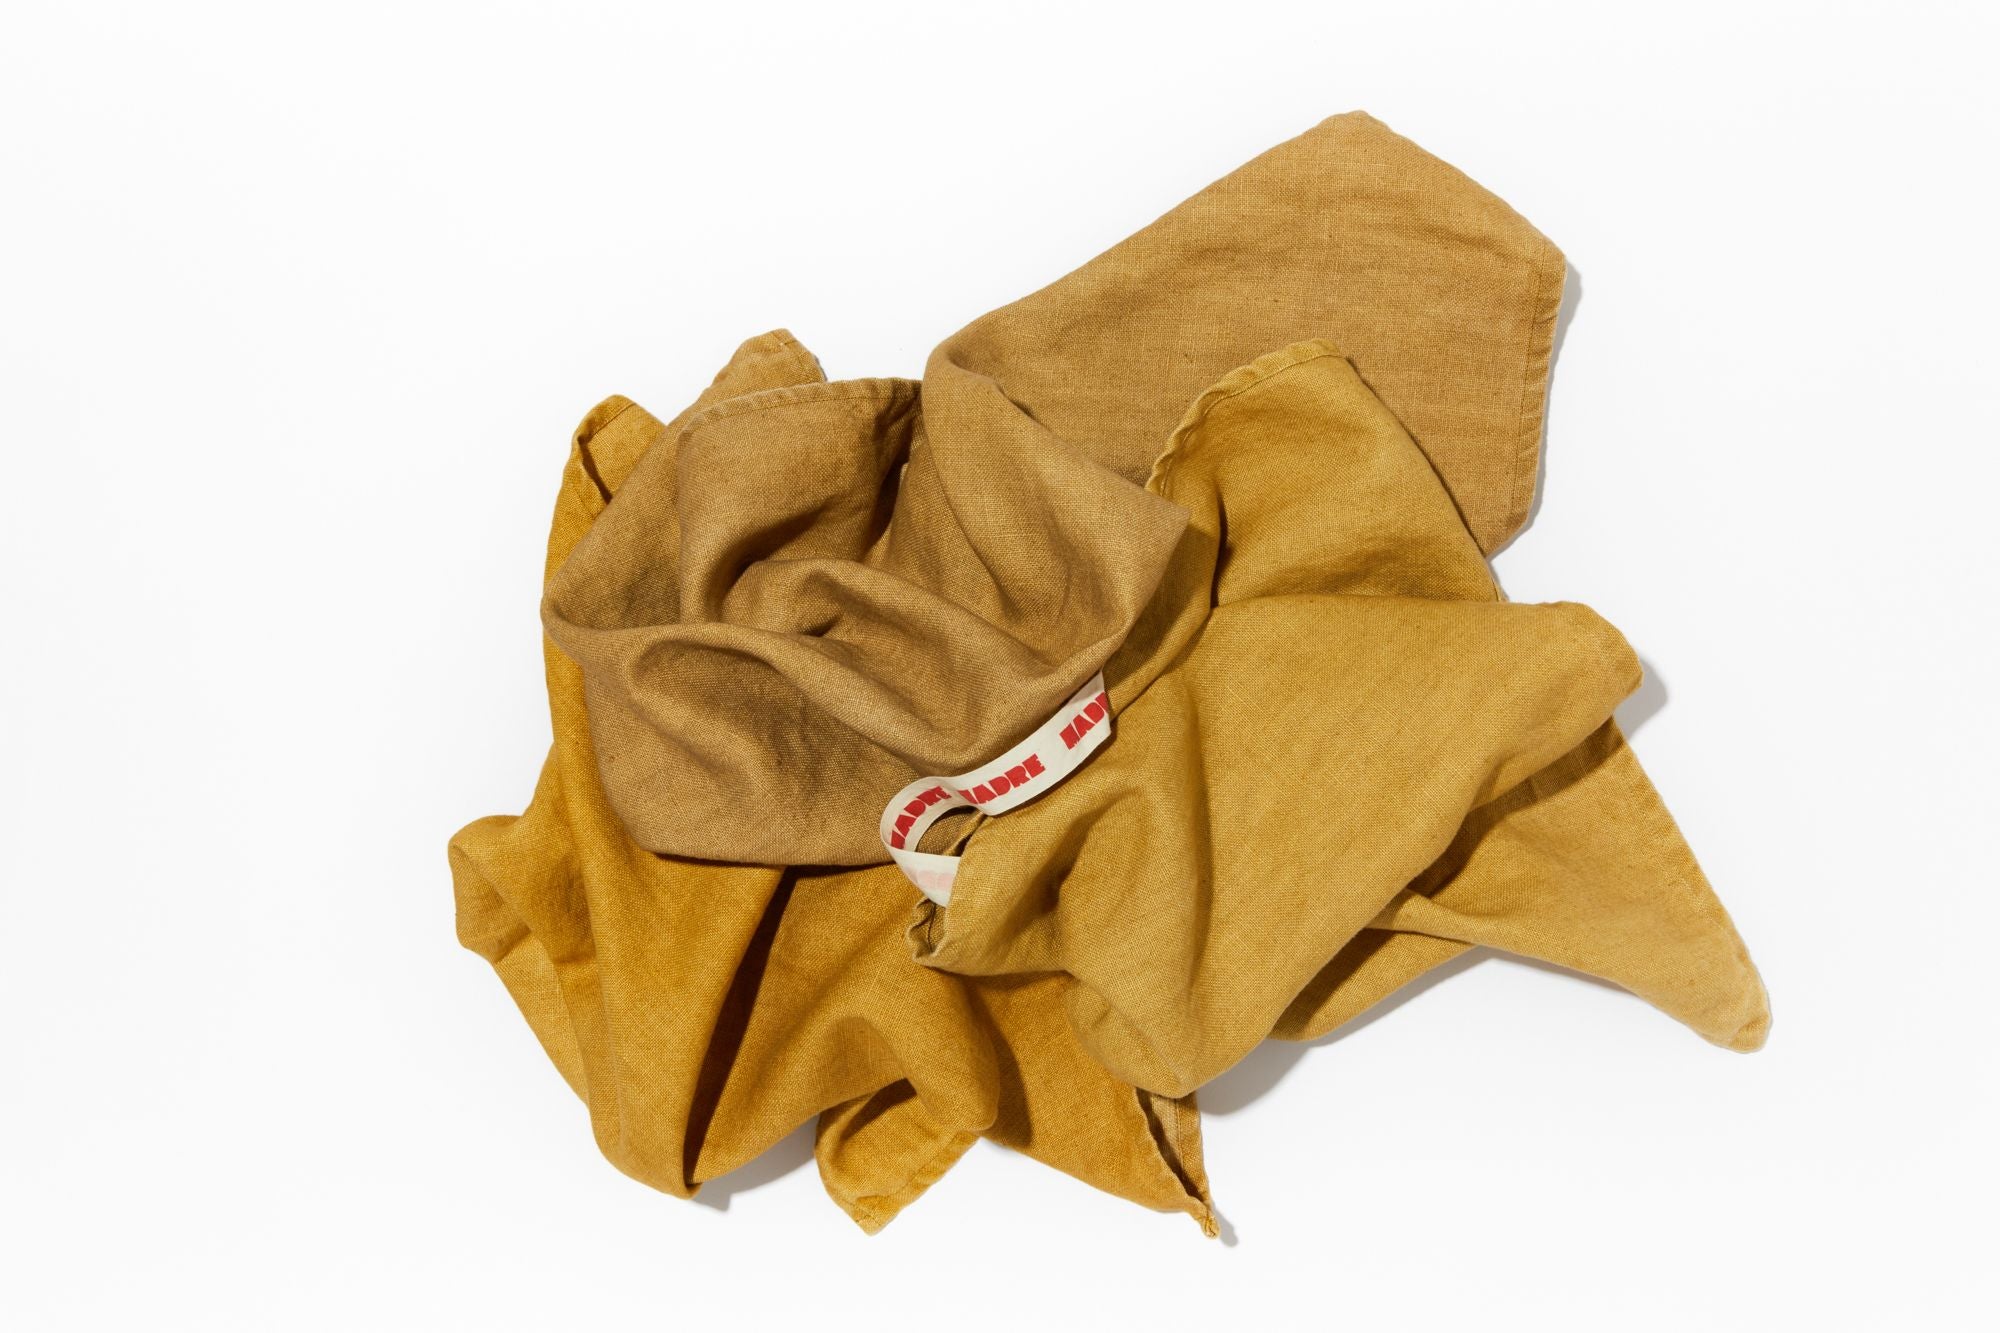 Linen Tea Towels, Muted Gold